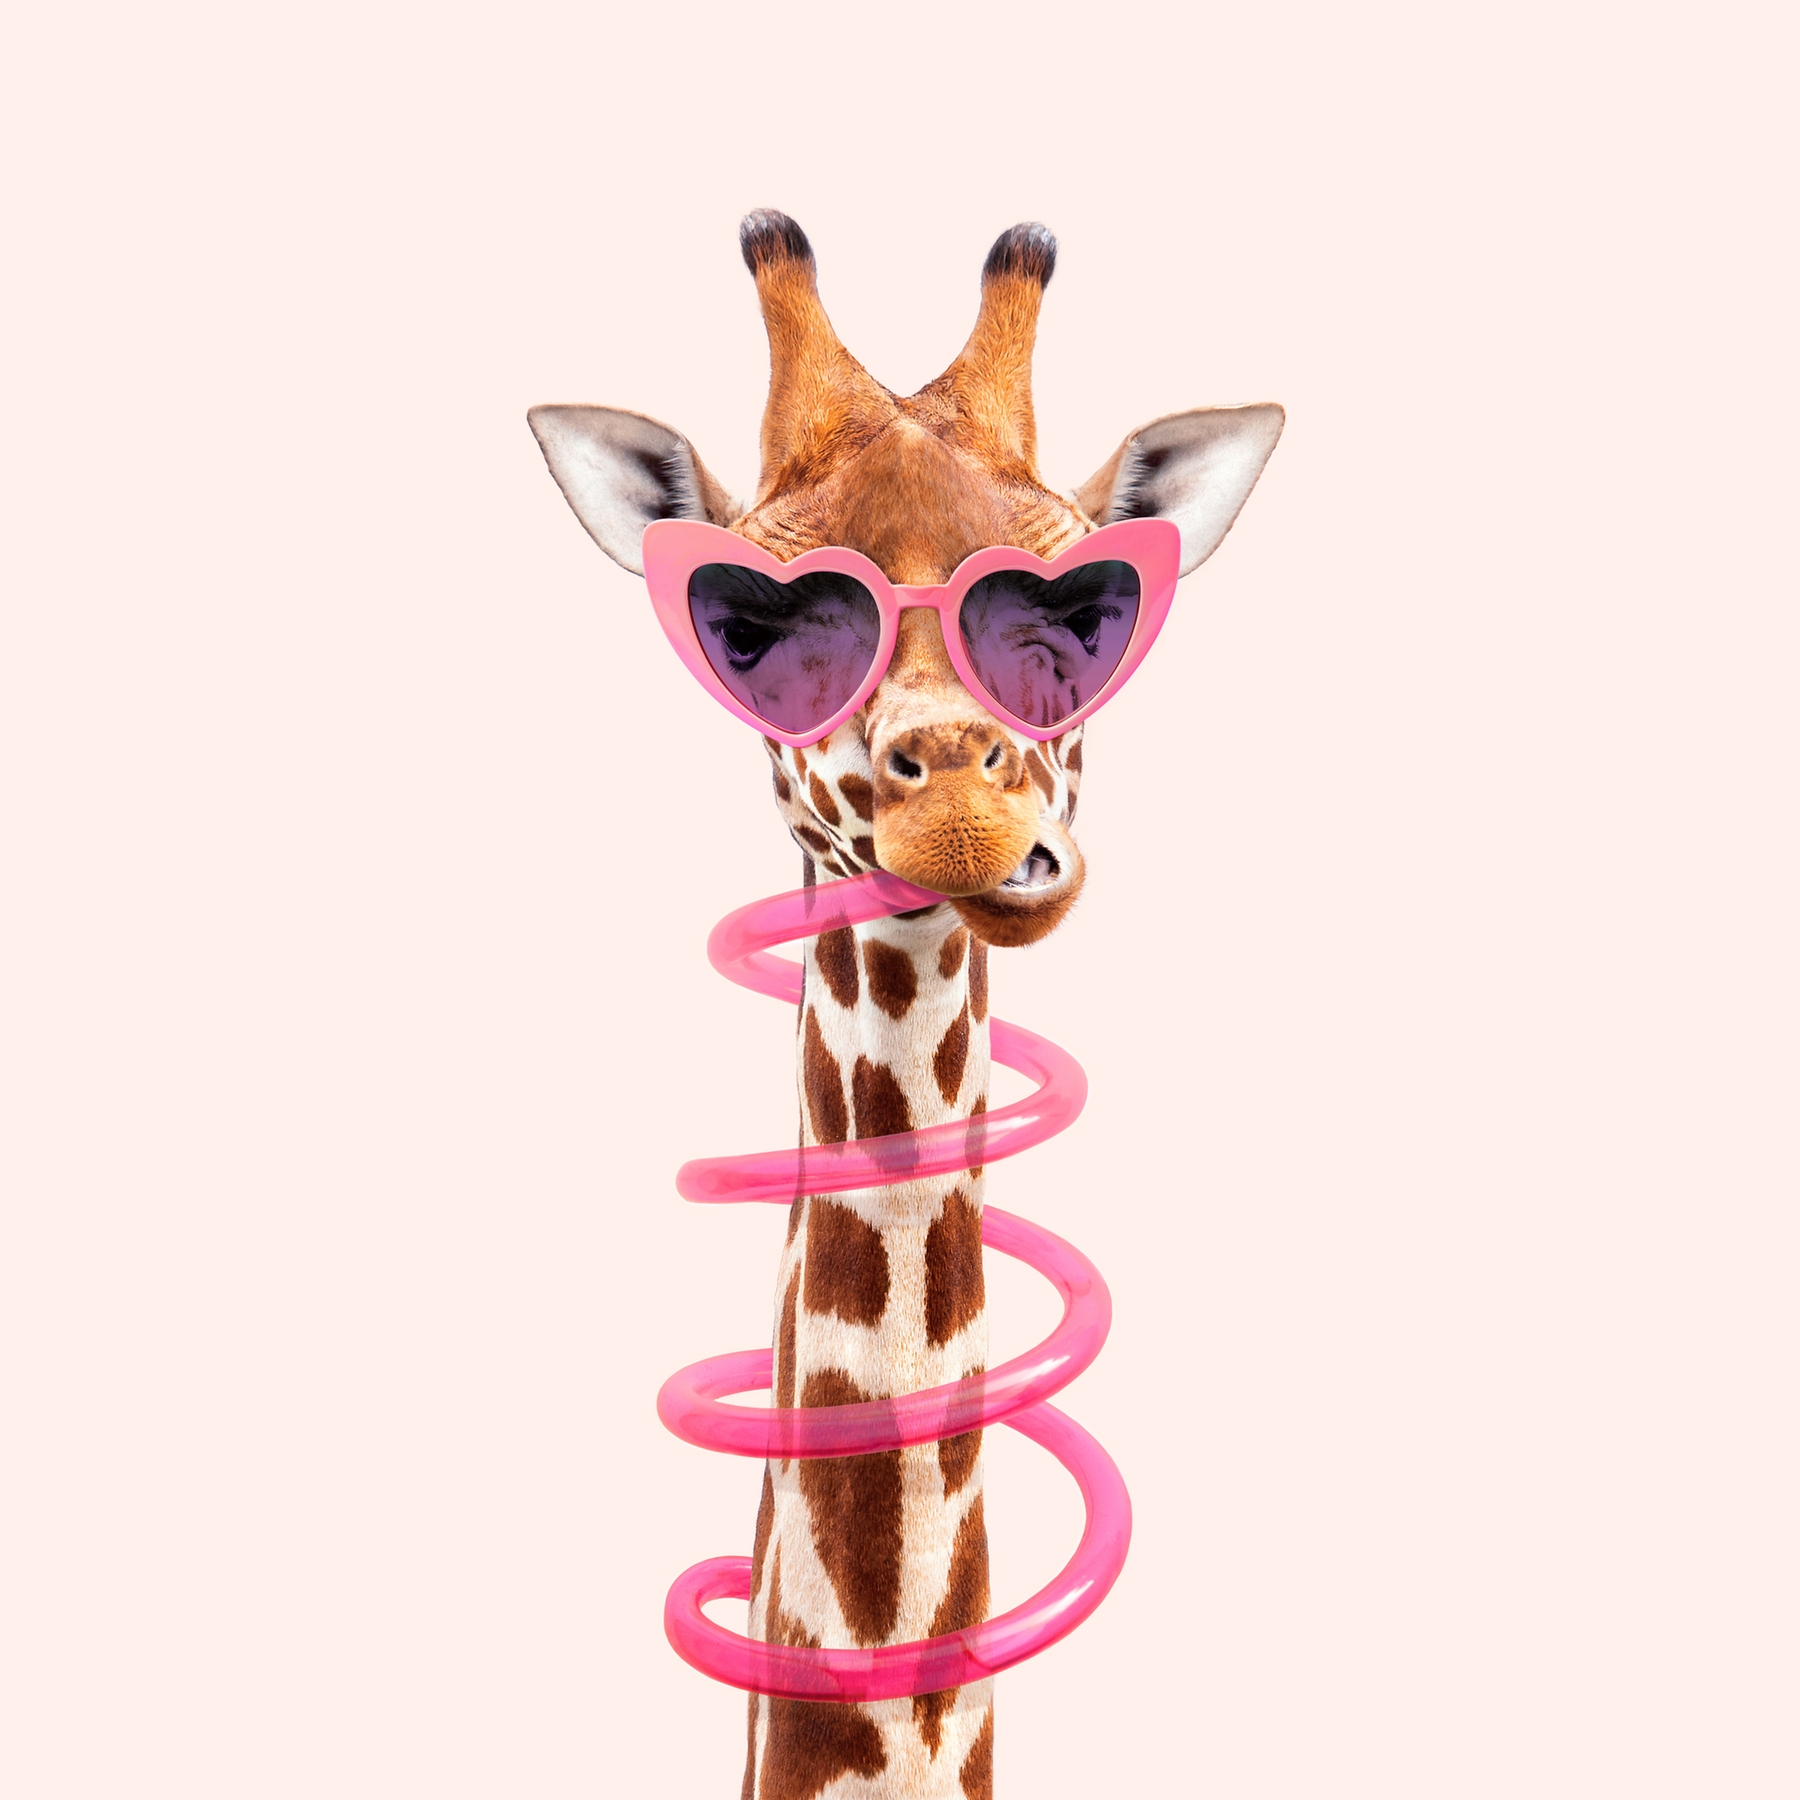 Cute Giraffe Mobile Wallpaper Images Free Download on Lovepik  400517495